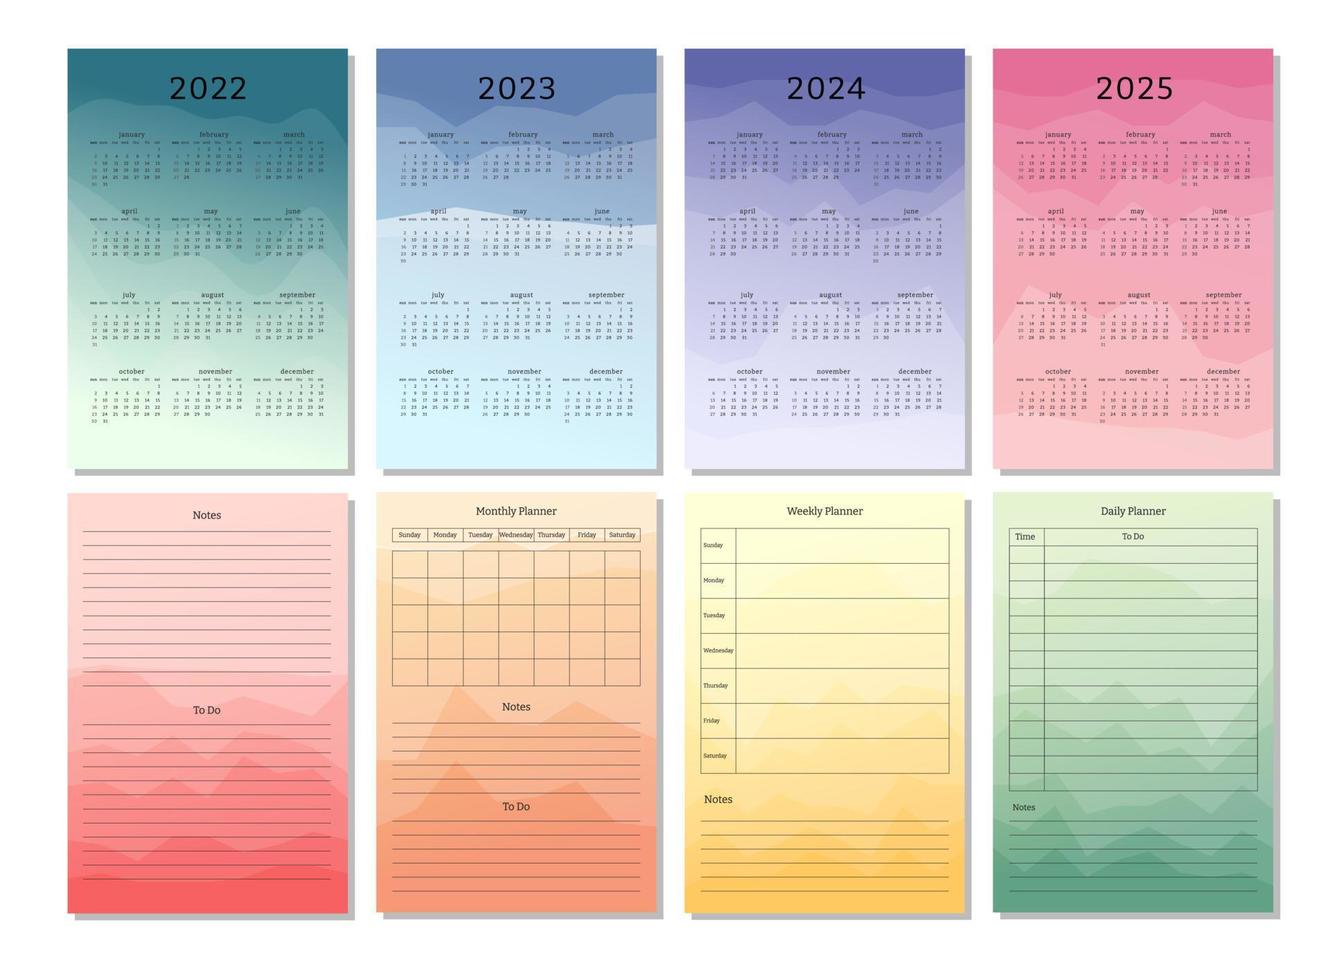 2022 2023 2024 2025 calendario vertical diario semanal mensual planificador personal calendario plantilla de diario. pico silueta abstracta fondo colorido degradado, diseño para impresión y digital vector